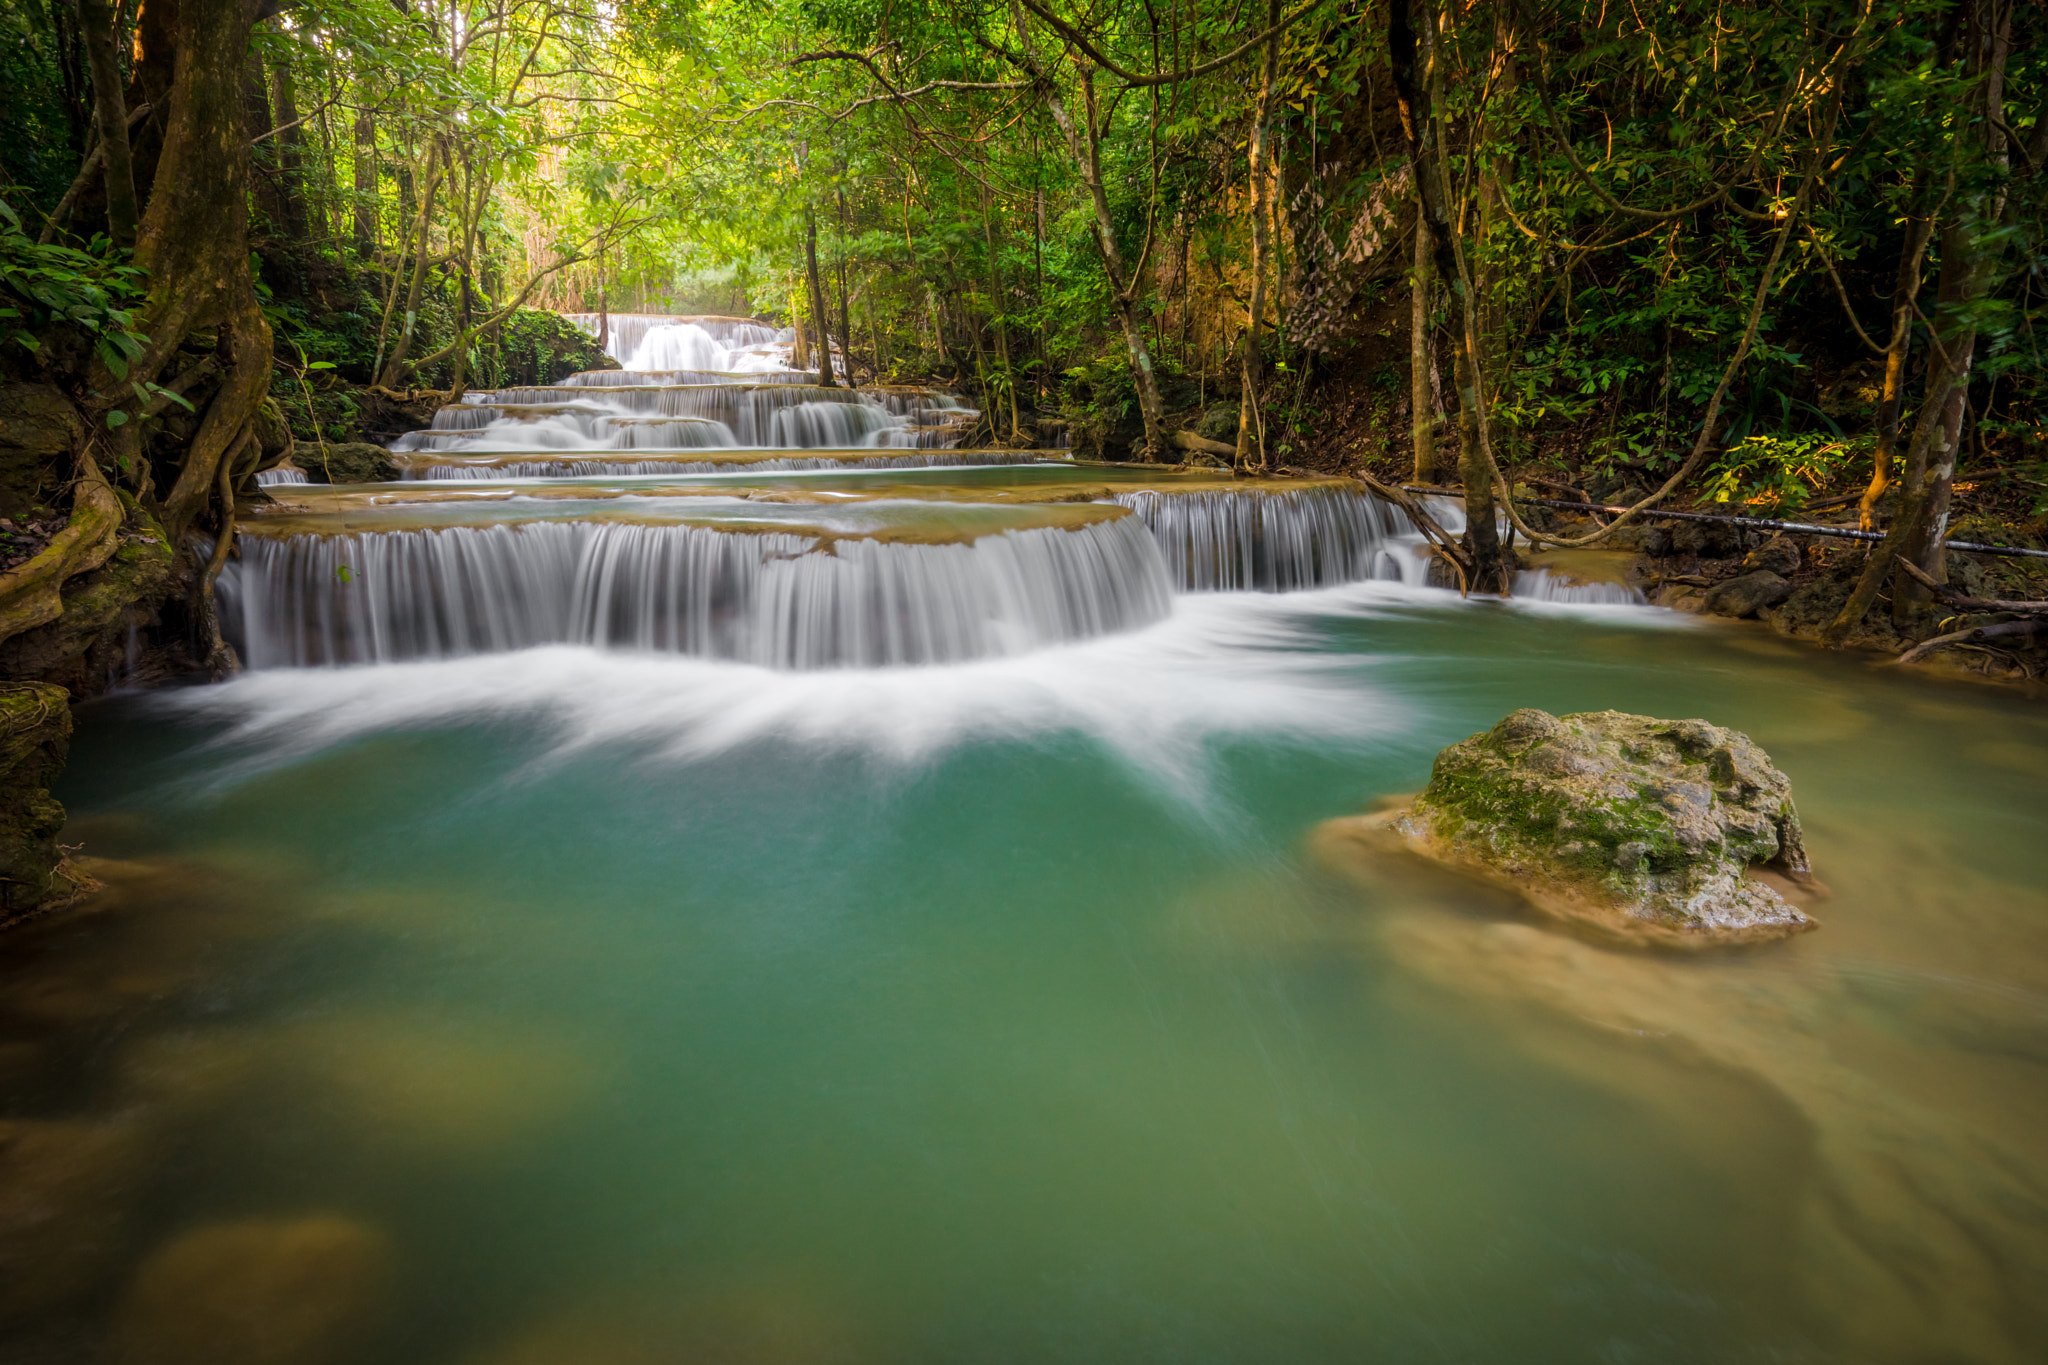 Sony a99 II sample photo. Huai mae kamin waterfall in kanchanaburi province, thailand photography